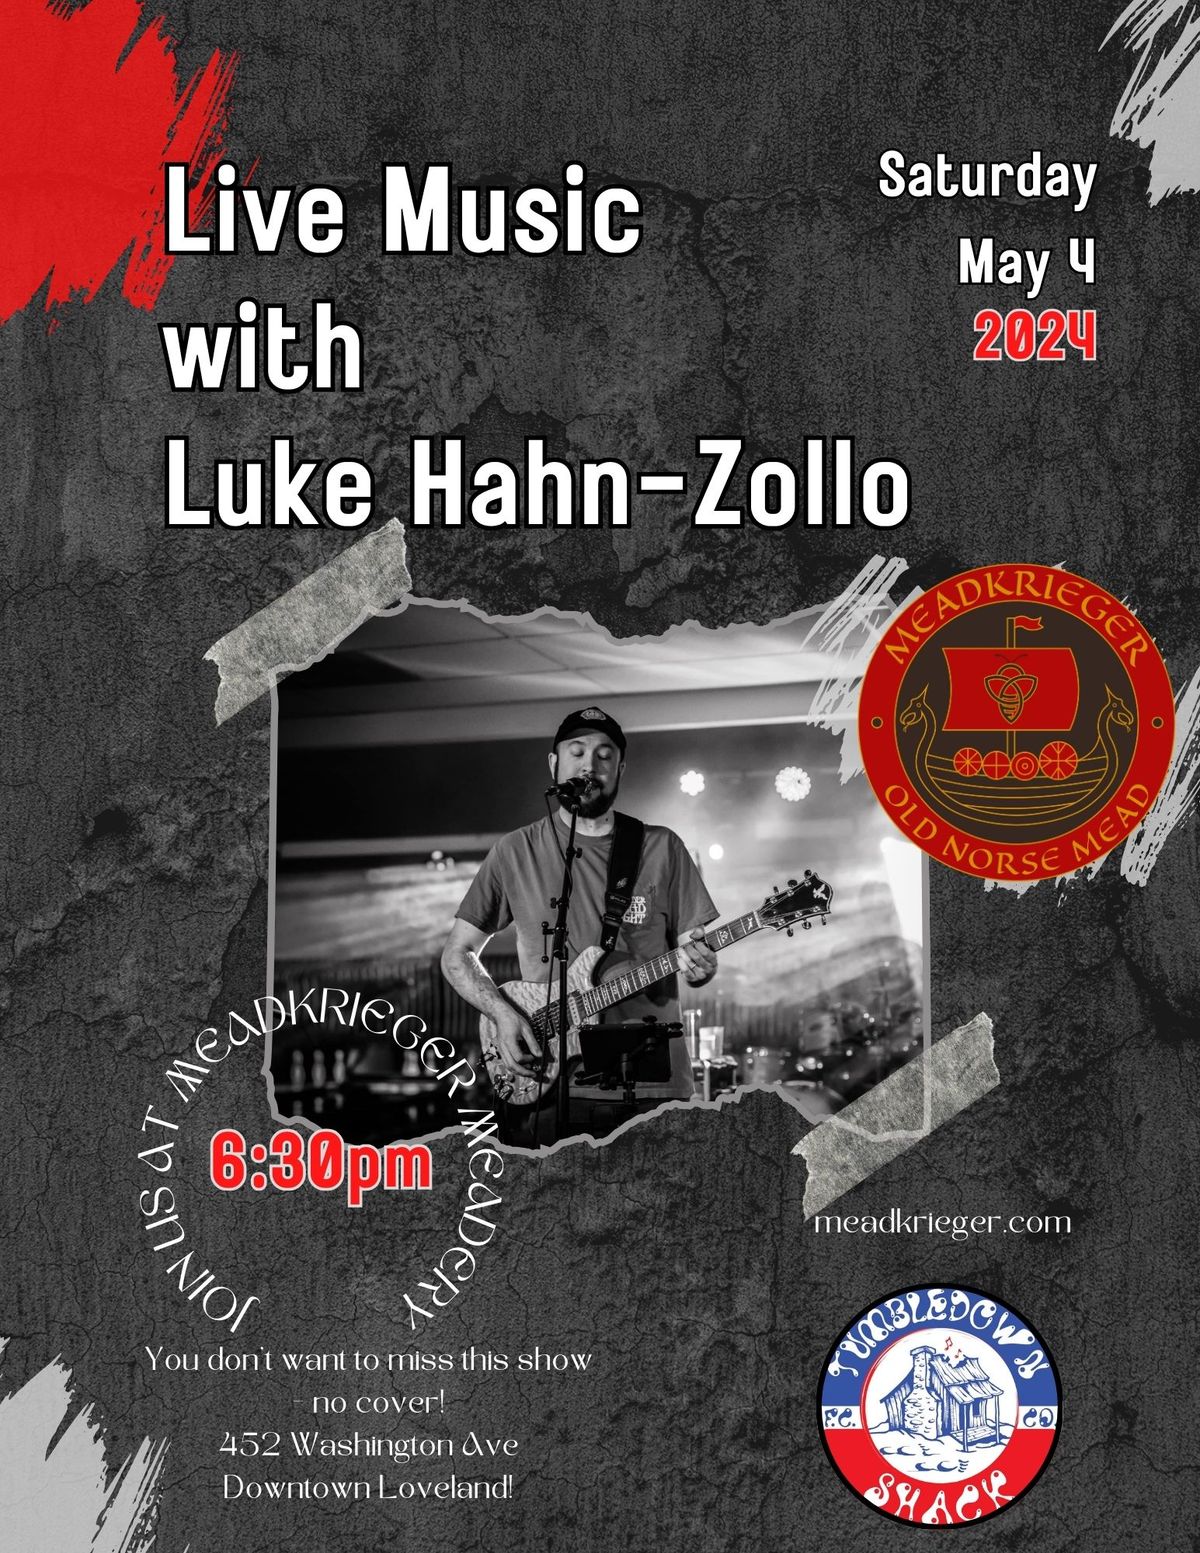 Live Music with Tumbledown Shack's Luke Hahn-Zollo!